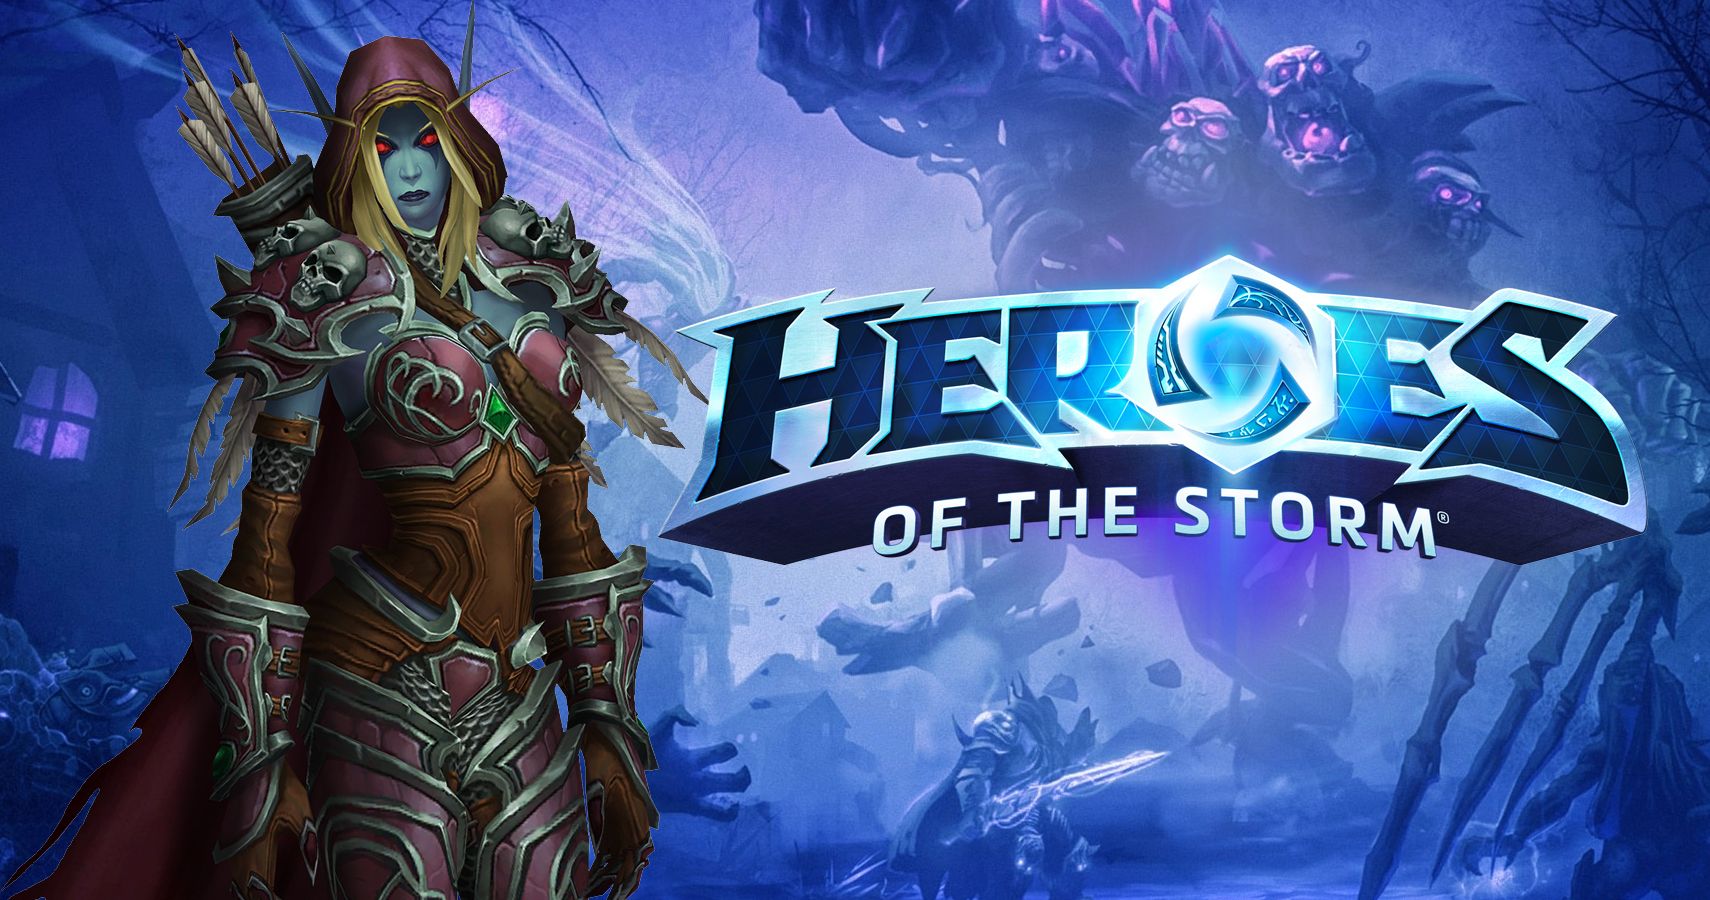 download sylvanas heroes of the storm